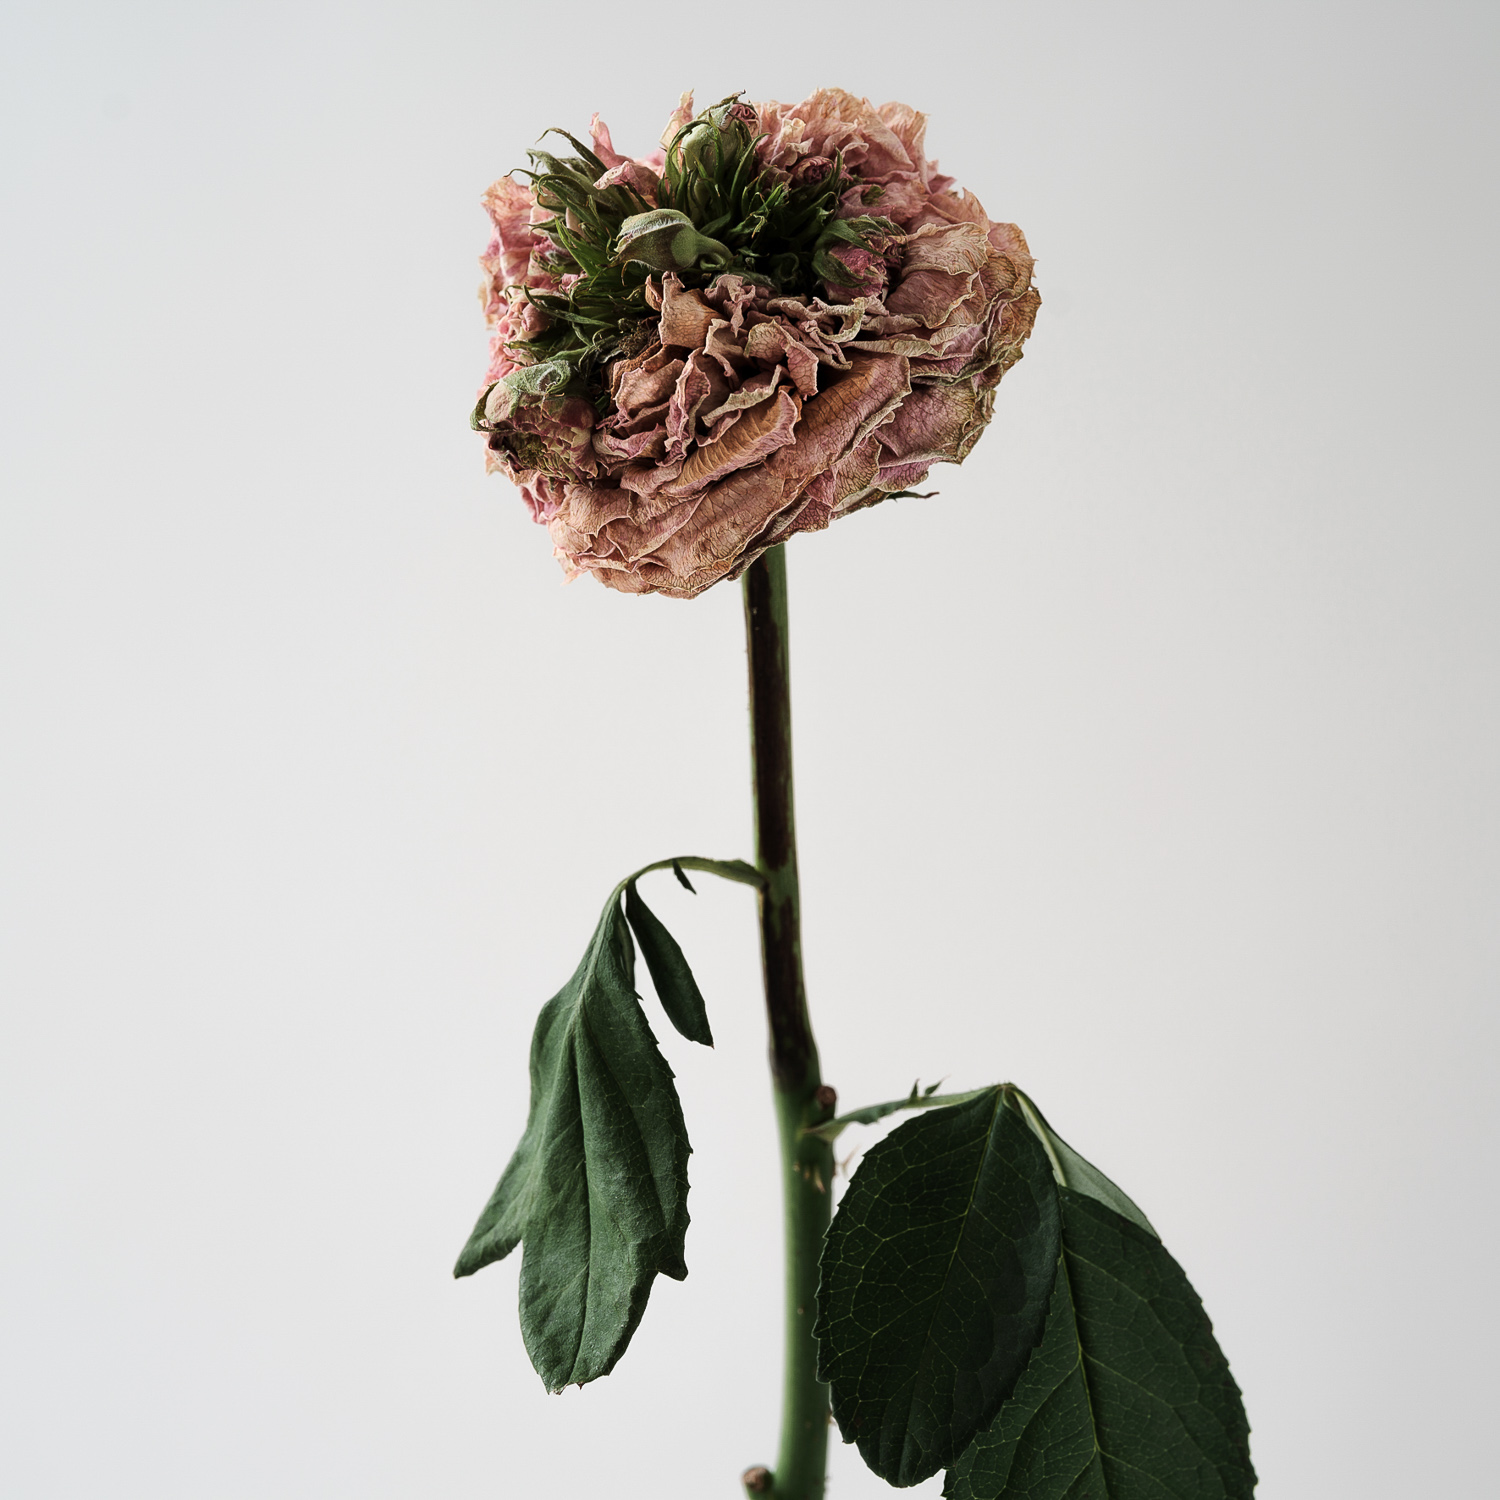 Rose　Taken in 2019　Size 1000mm x 1000mm　Archival pigment print　Alpolic finish（2019年撮影　1000mm角　アーカイバルピグメントプリント　アルポリック仕上げ）